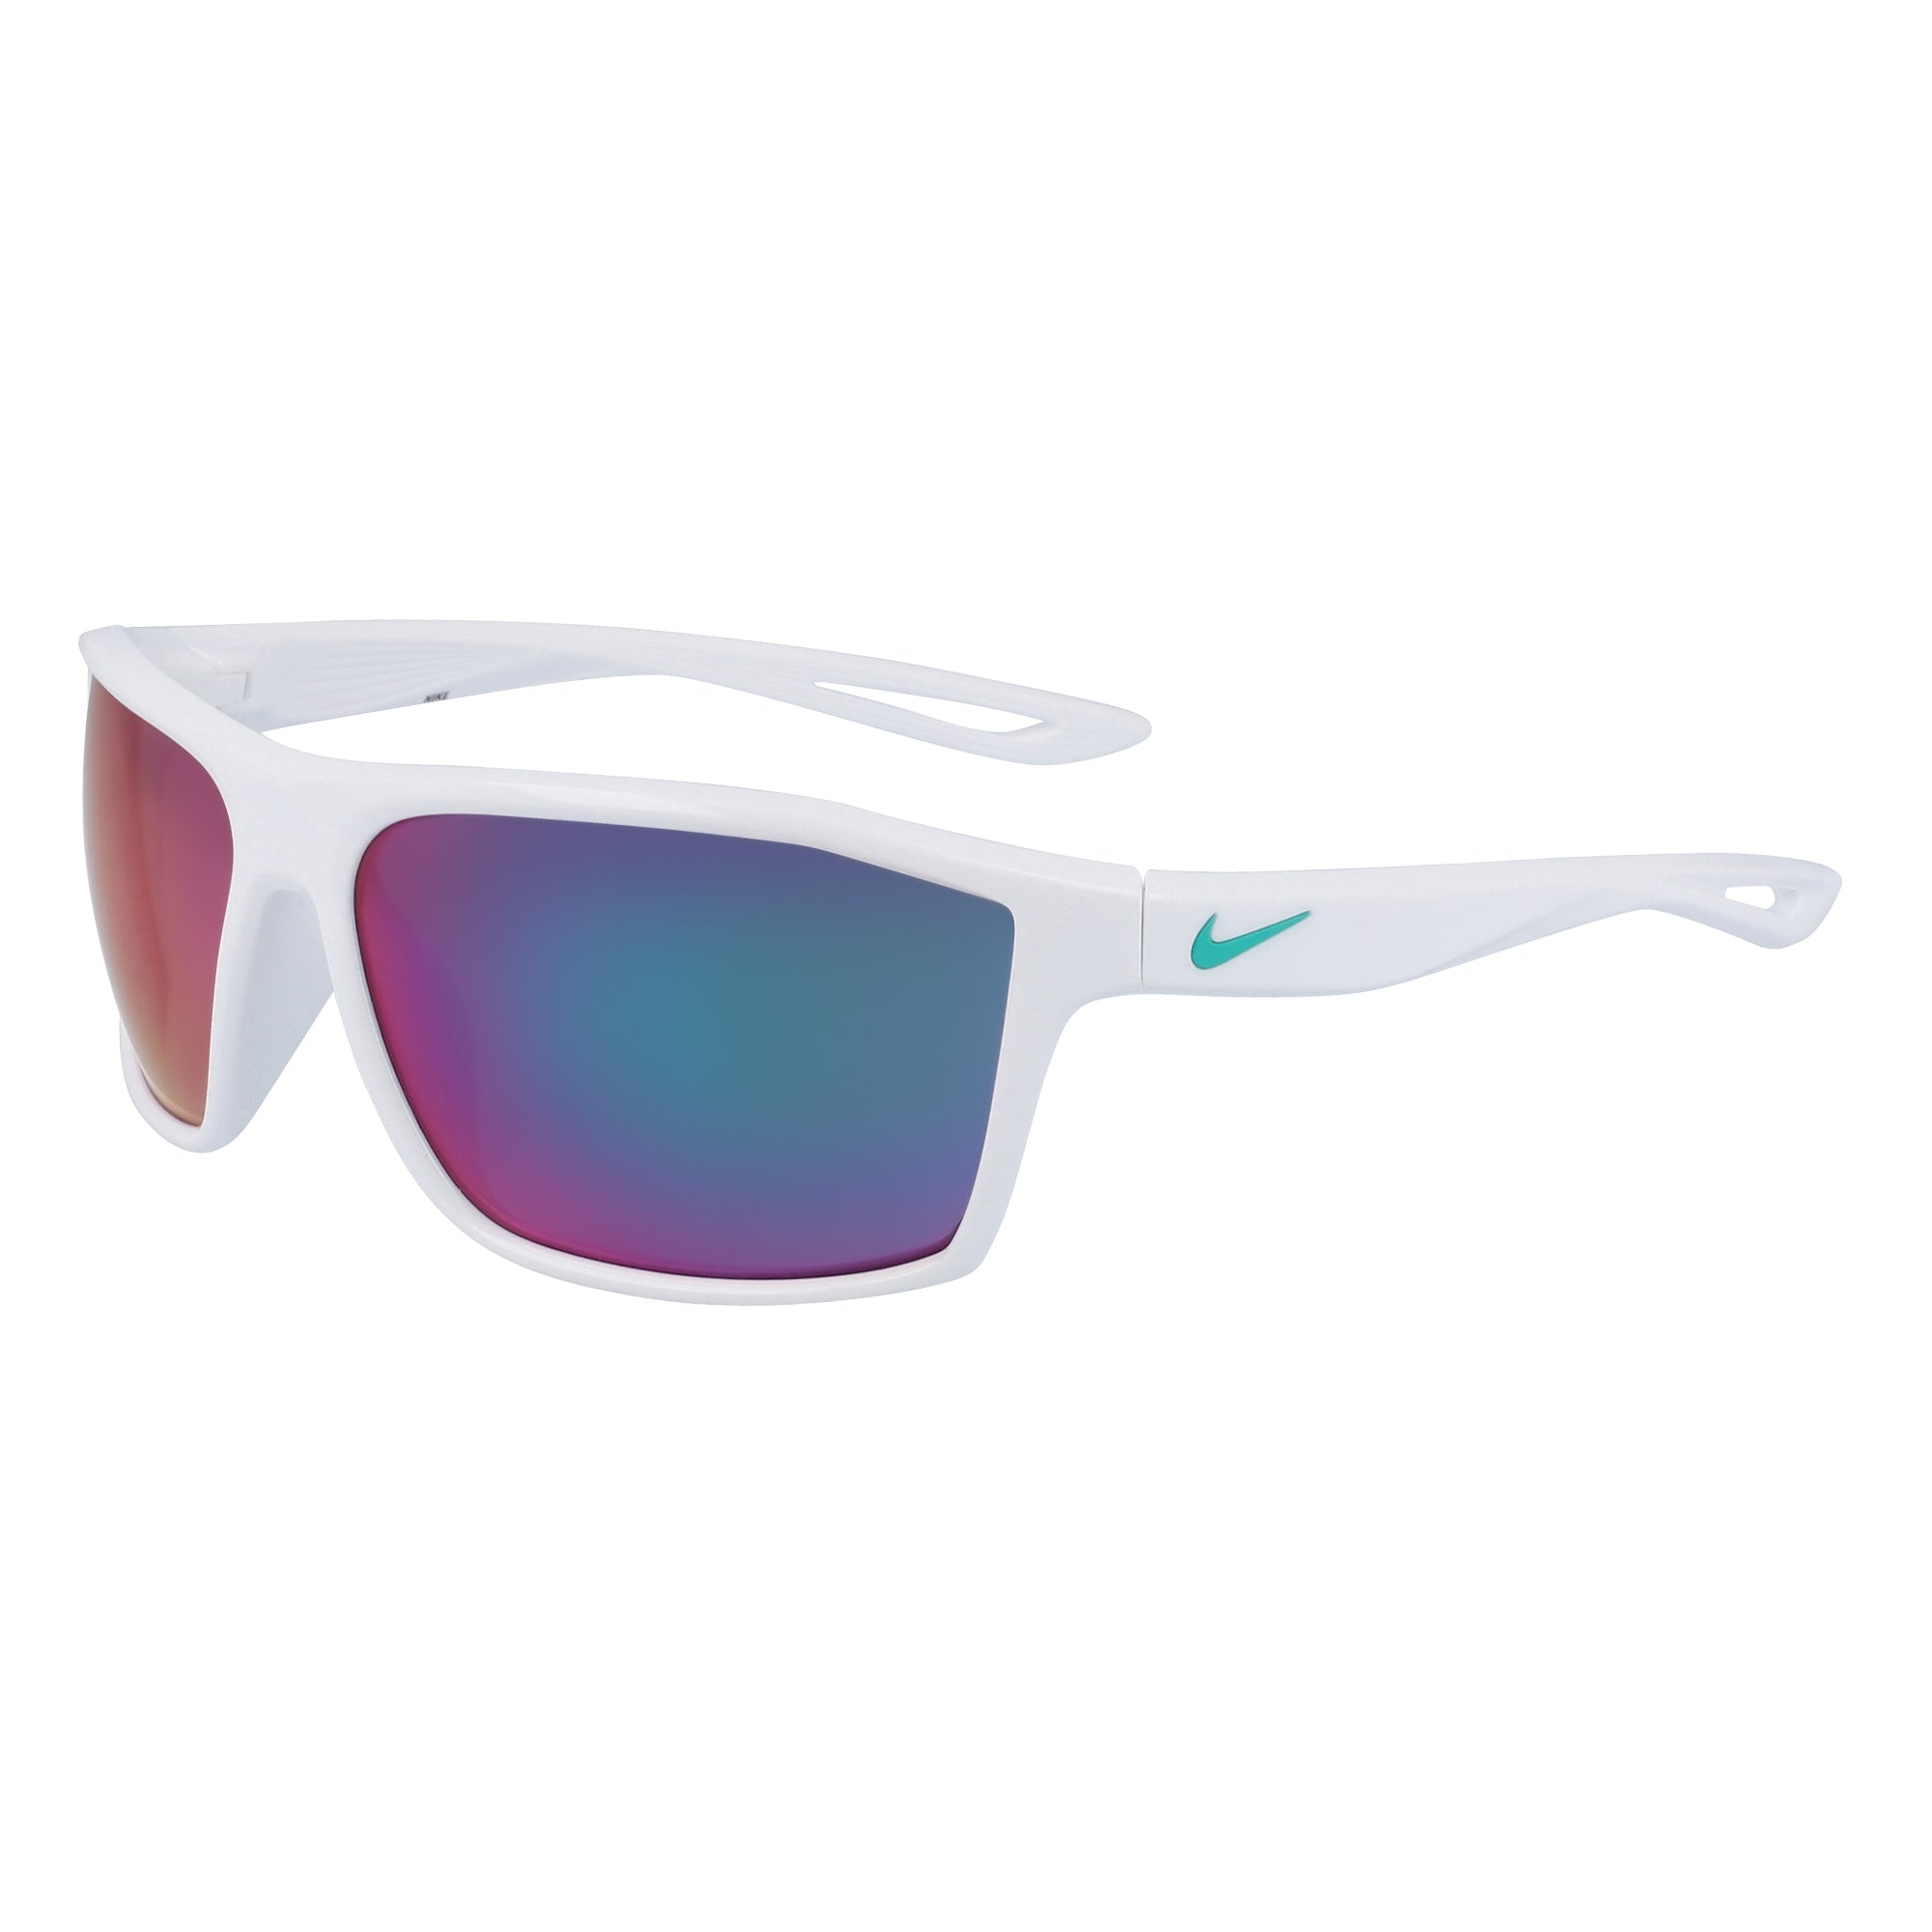 Nike Legend S M Sunglasses